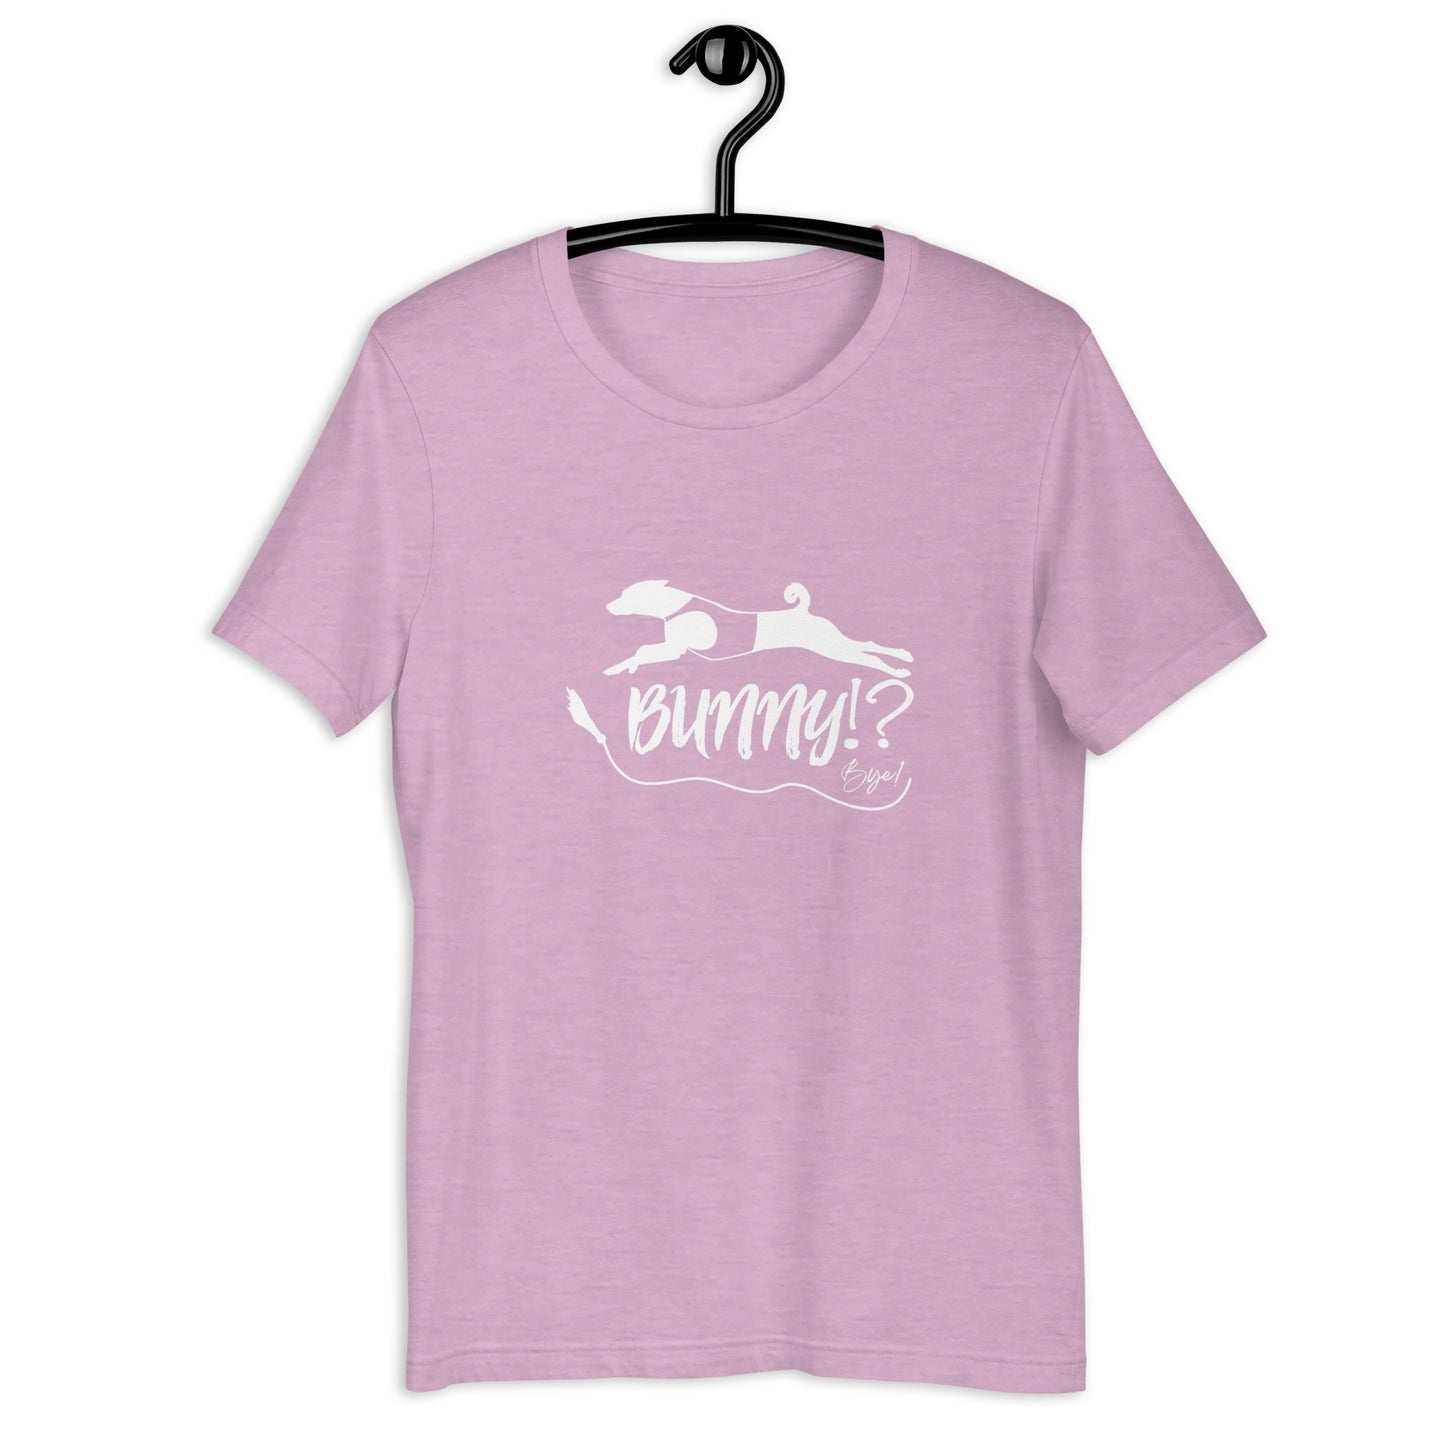 BUNNY!? - Basenji  - Unisex t-shirt